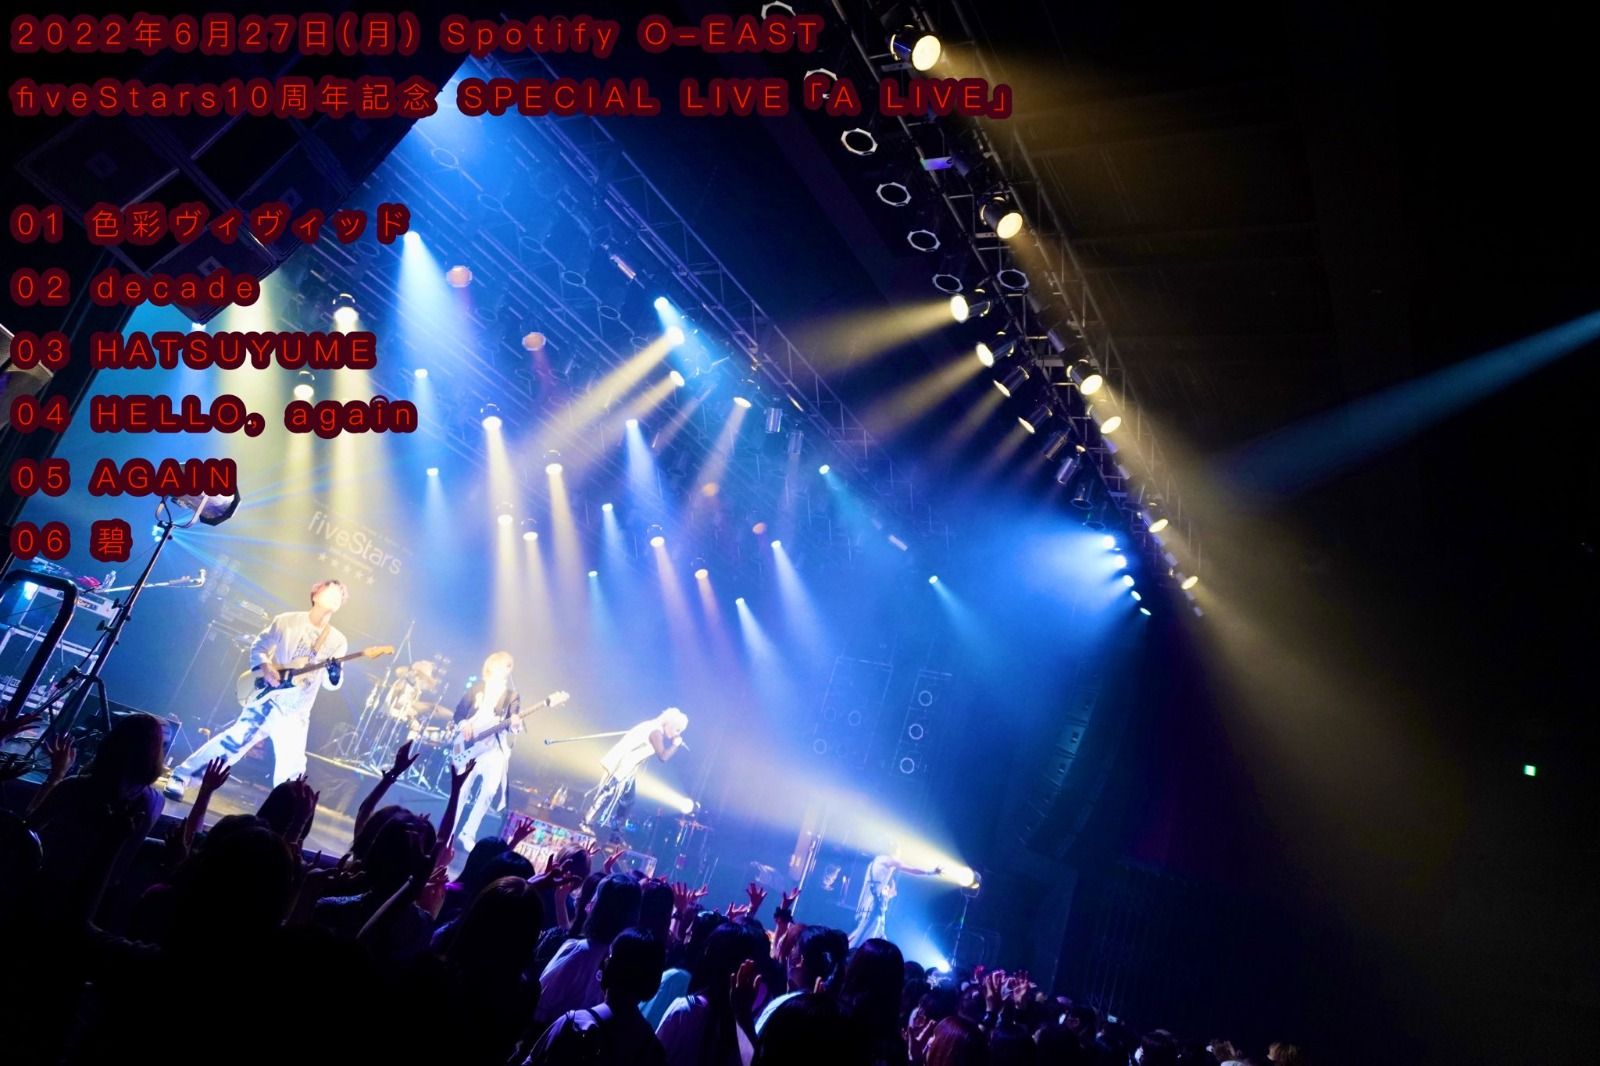 c16c5584 1ce5 402c 97b6 0a426d4ee2b1 - DaizyStripper. fiveStars 10th ANNIVERSARY LIVE.『A LIVE』@Spotify O-EAST (Live Report) - Nippon Gaku